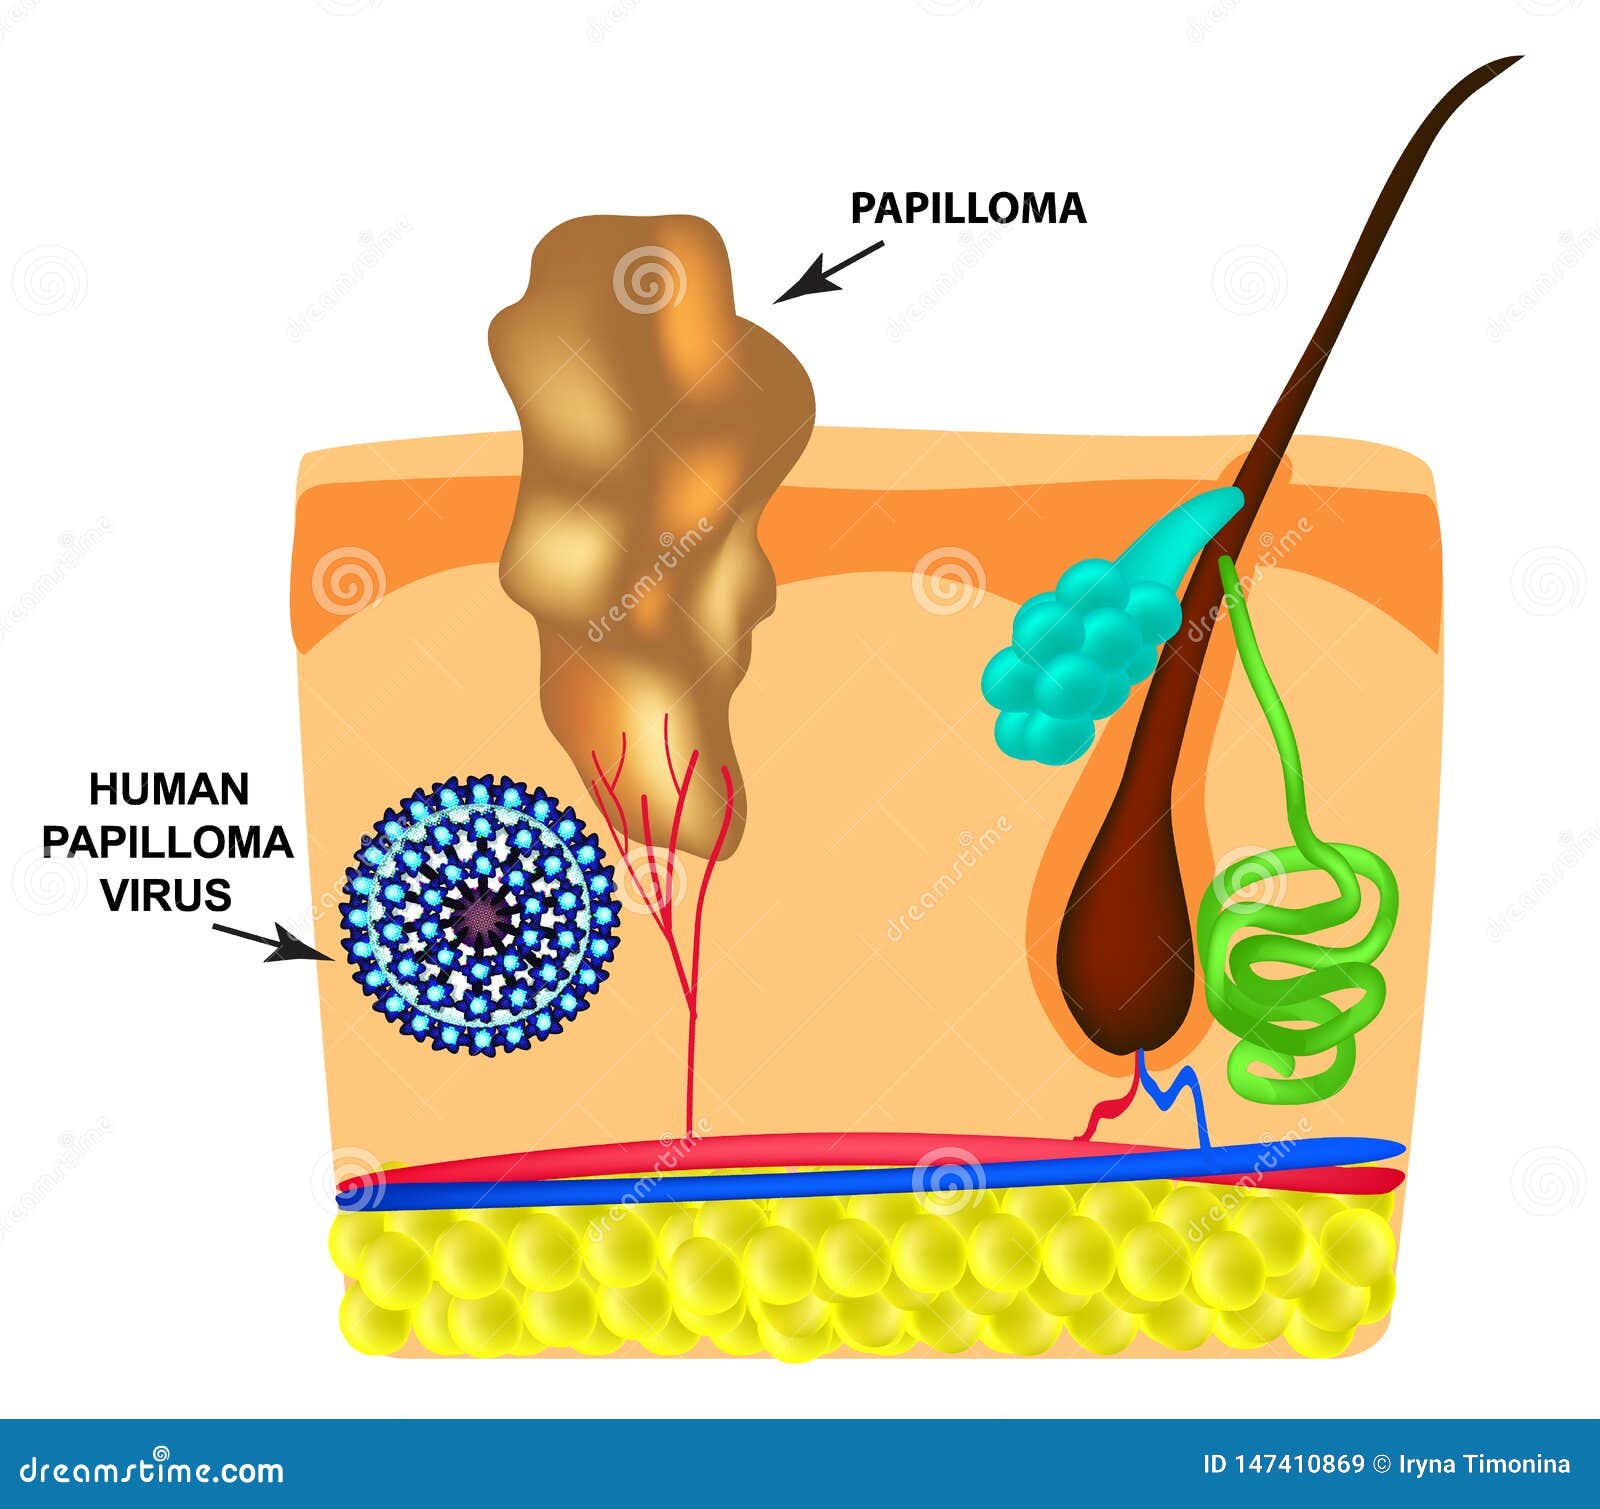 papilloma skin causes